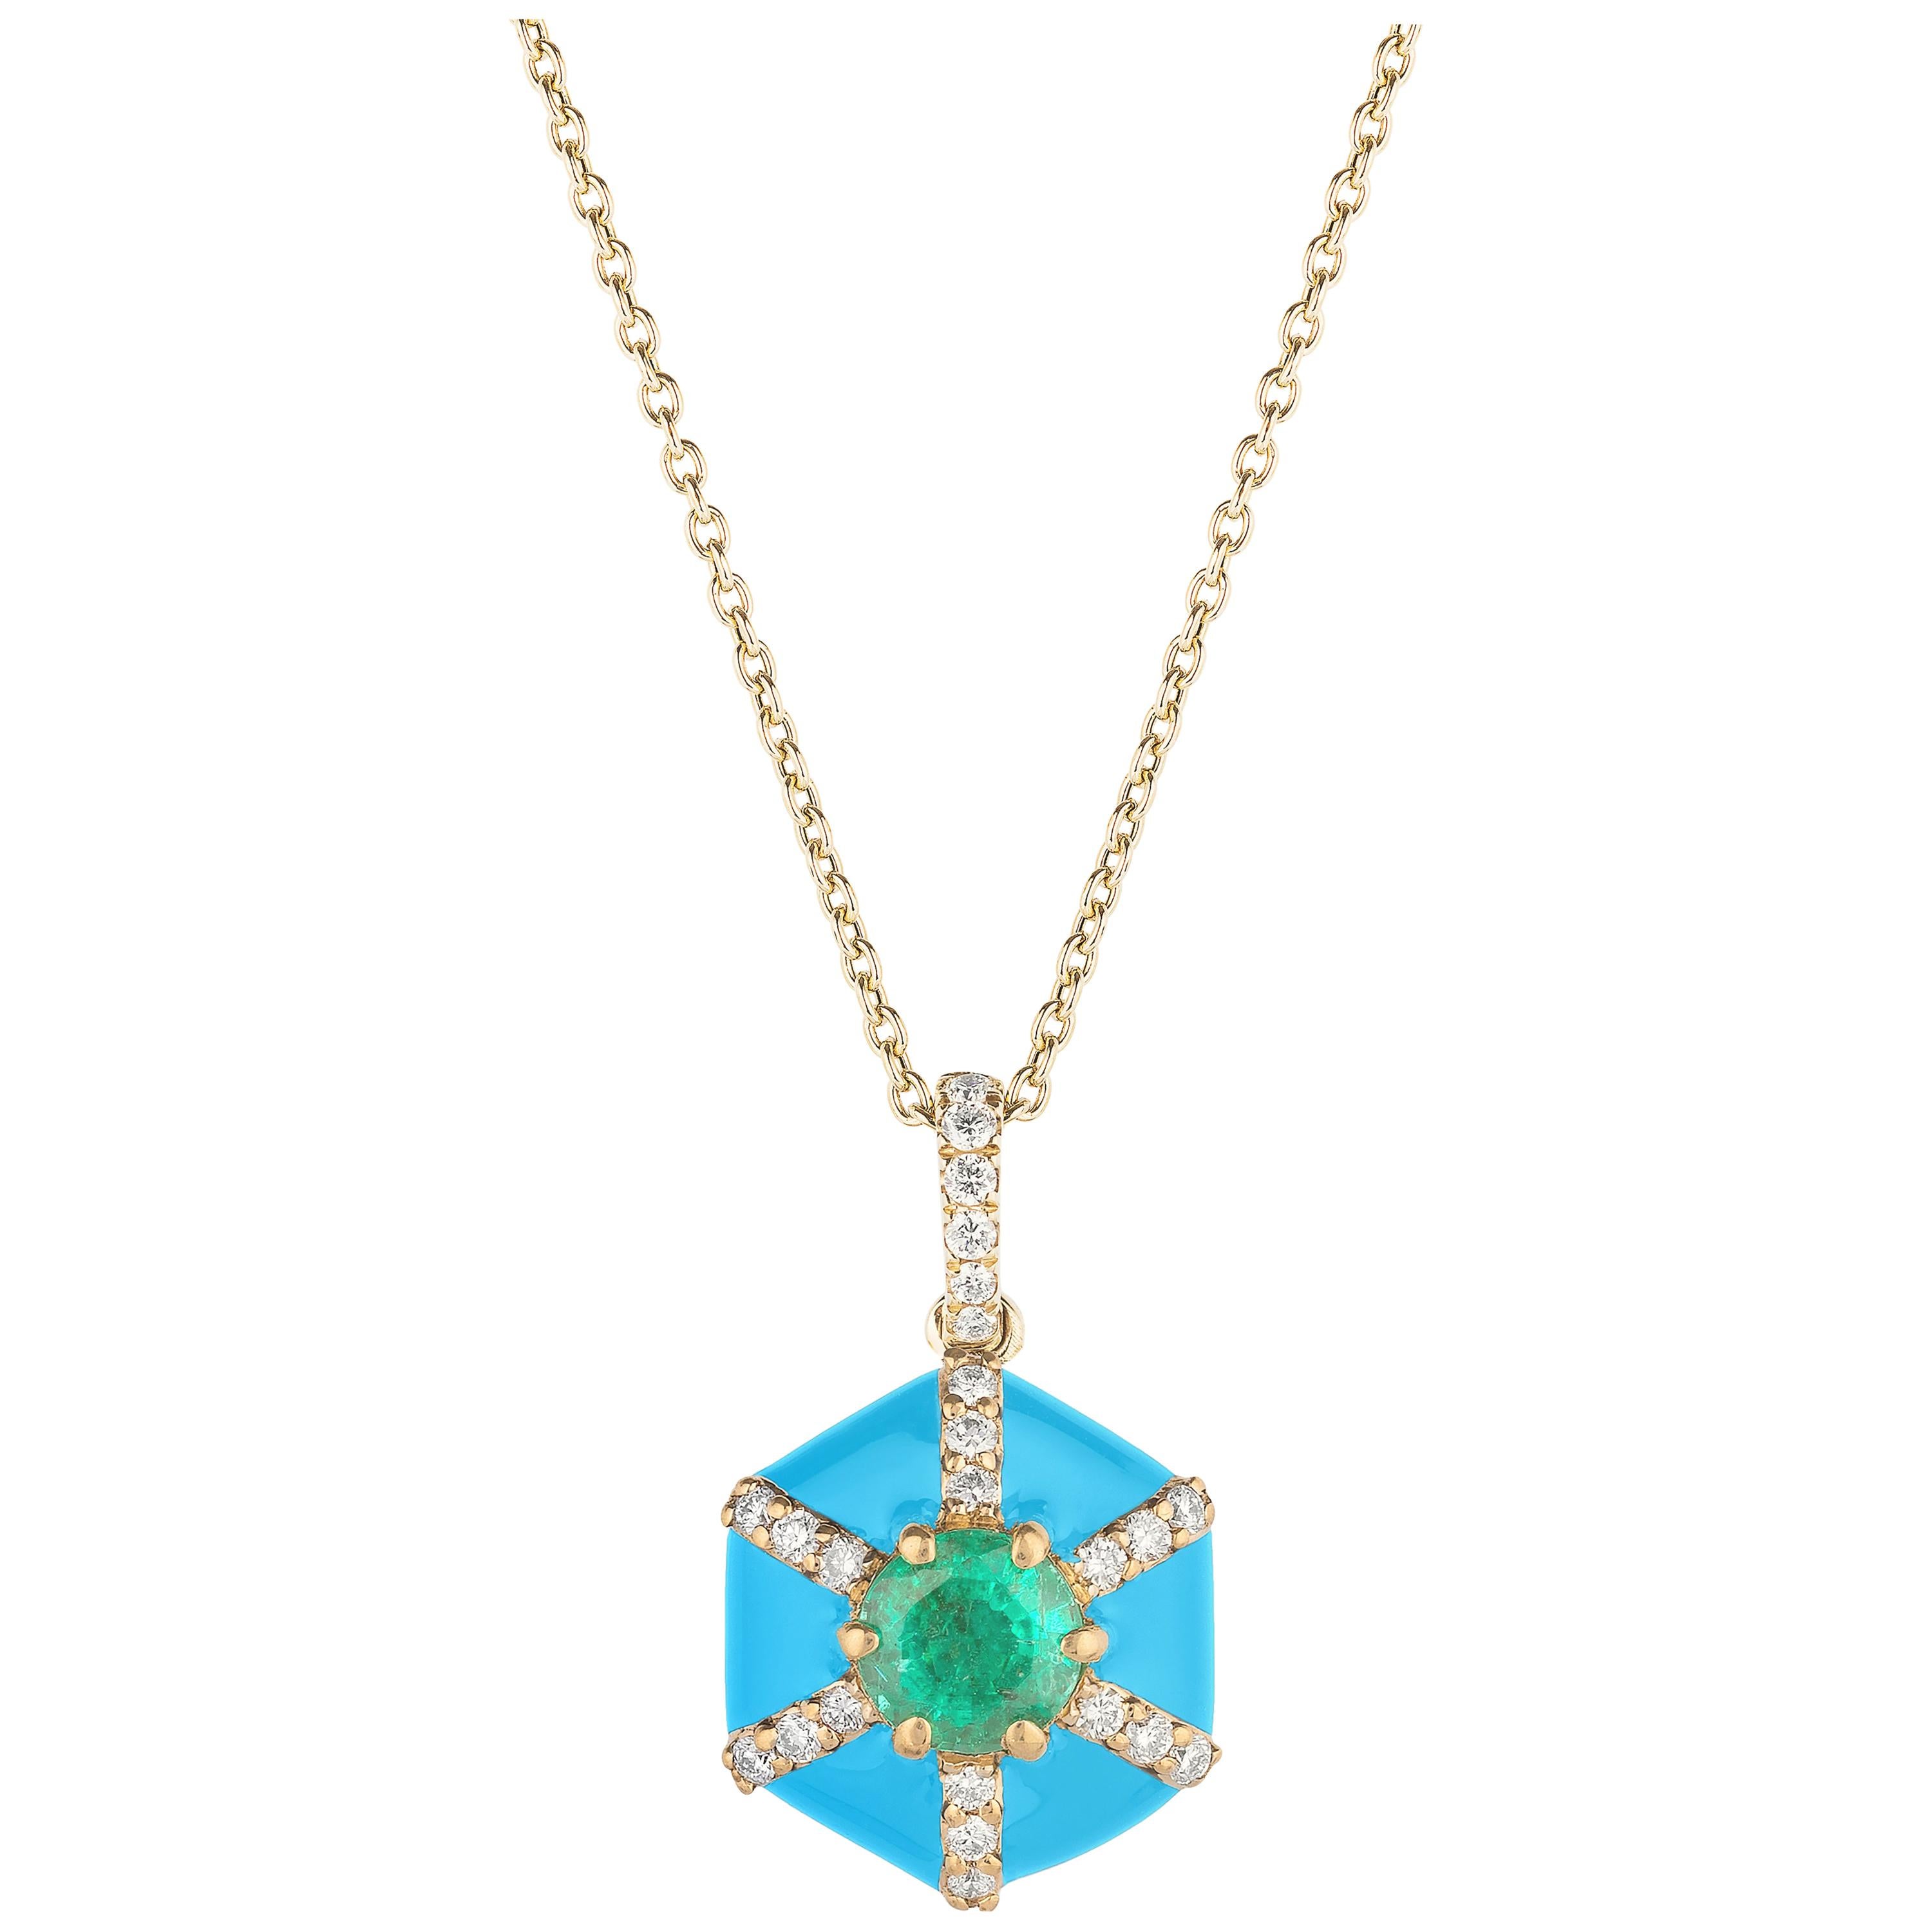 Pendentif Goshwara hexagonal en émail turquoise avec émeraude et diamants